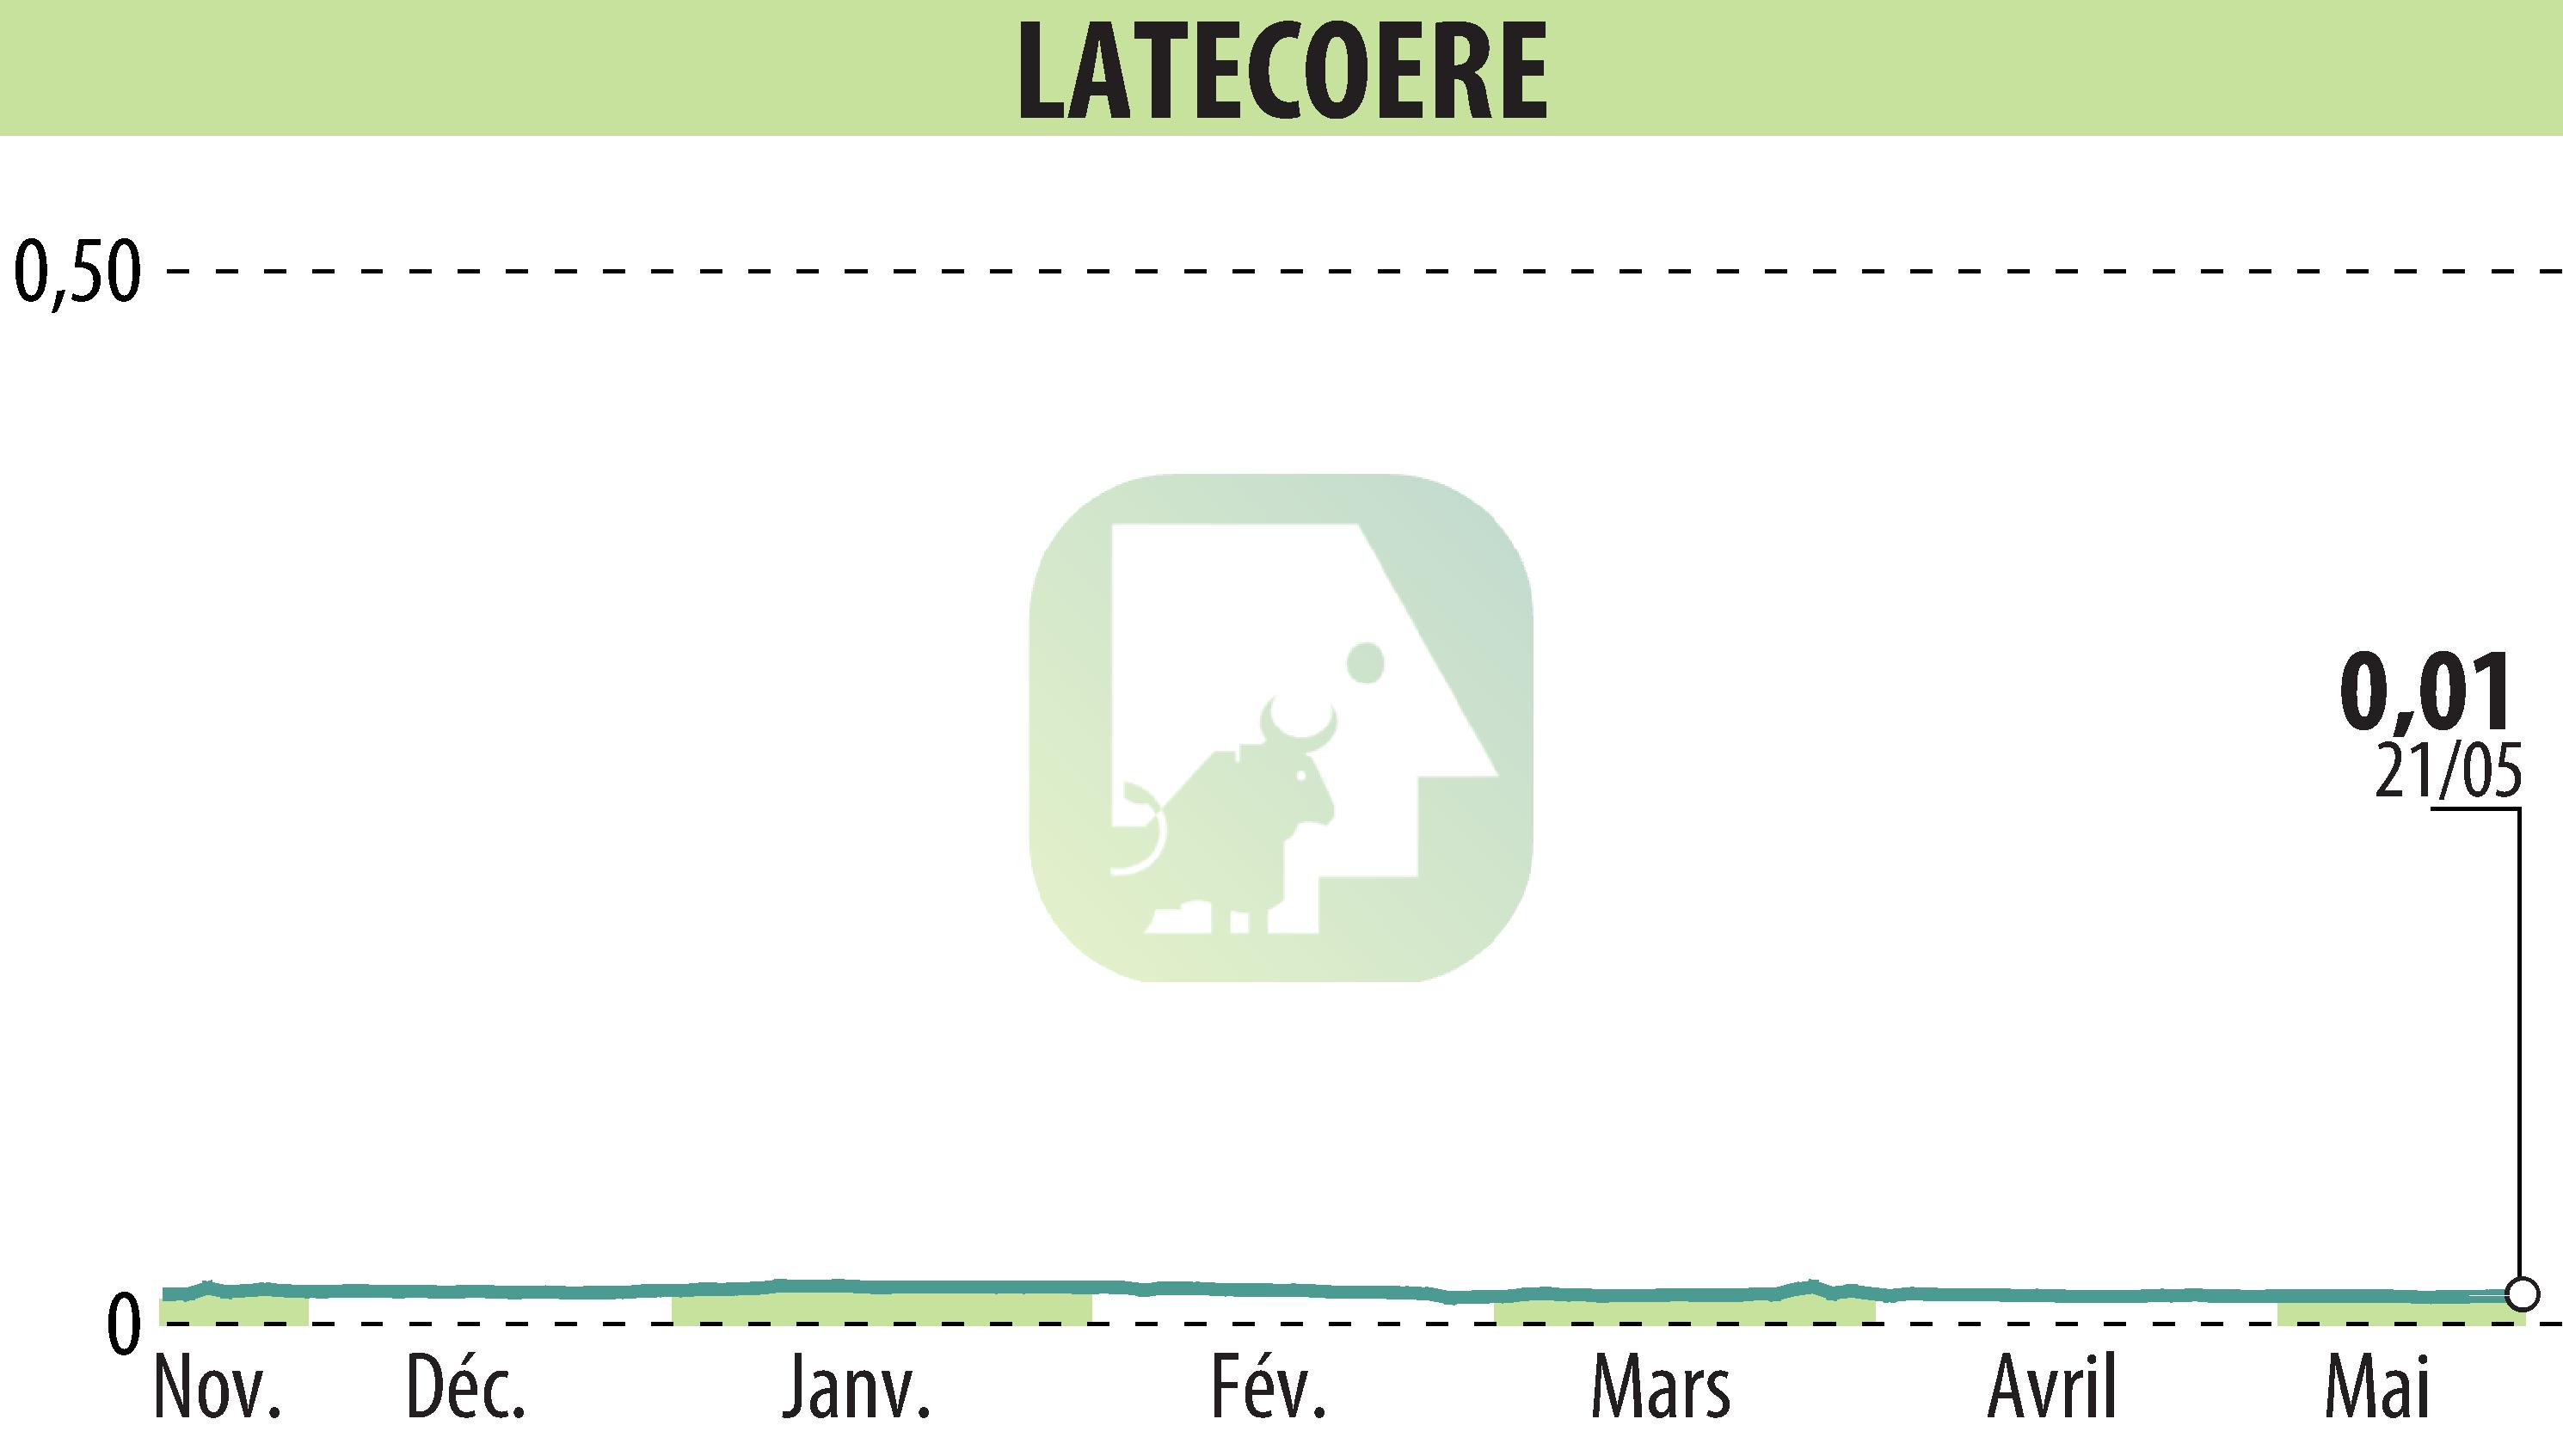 Stock price chart of LATECOERE (EPA:LAT) showing fluctuations.